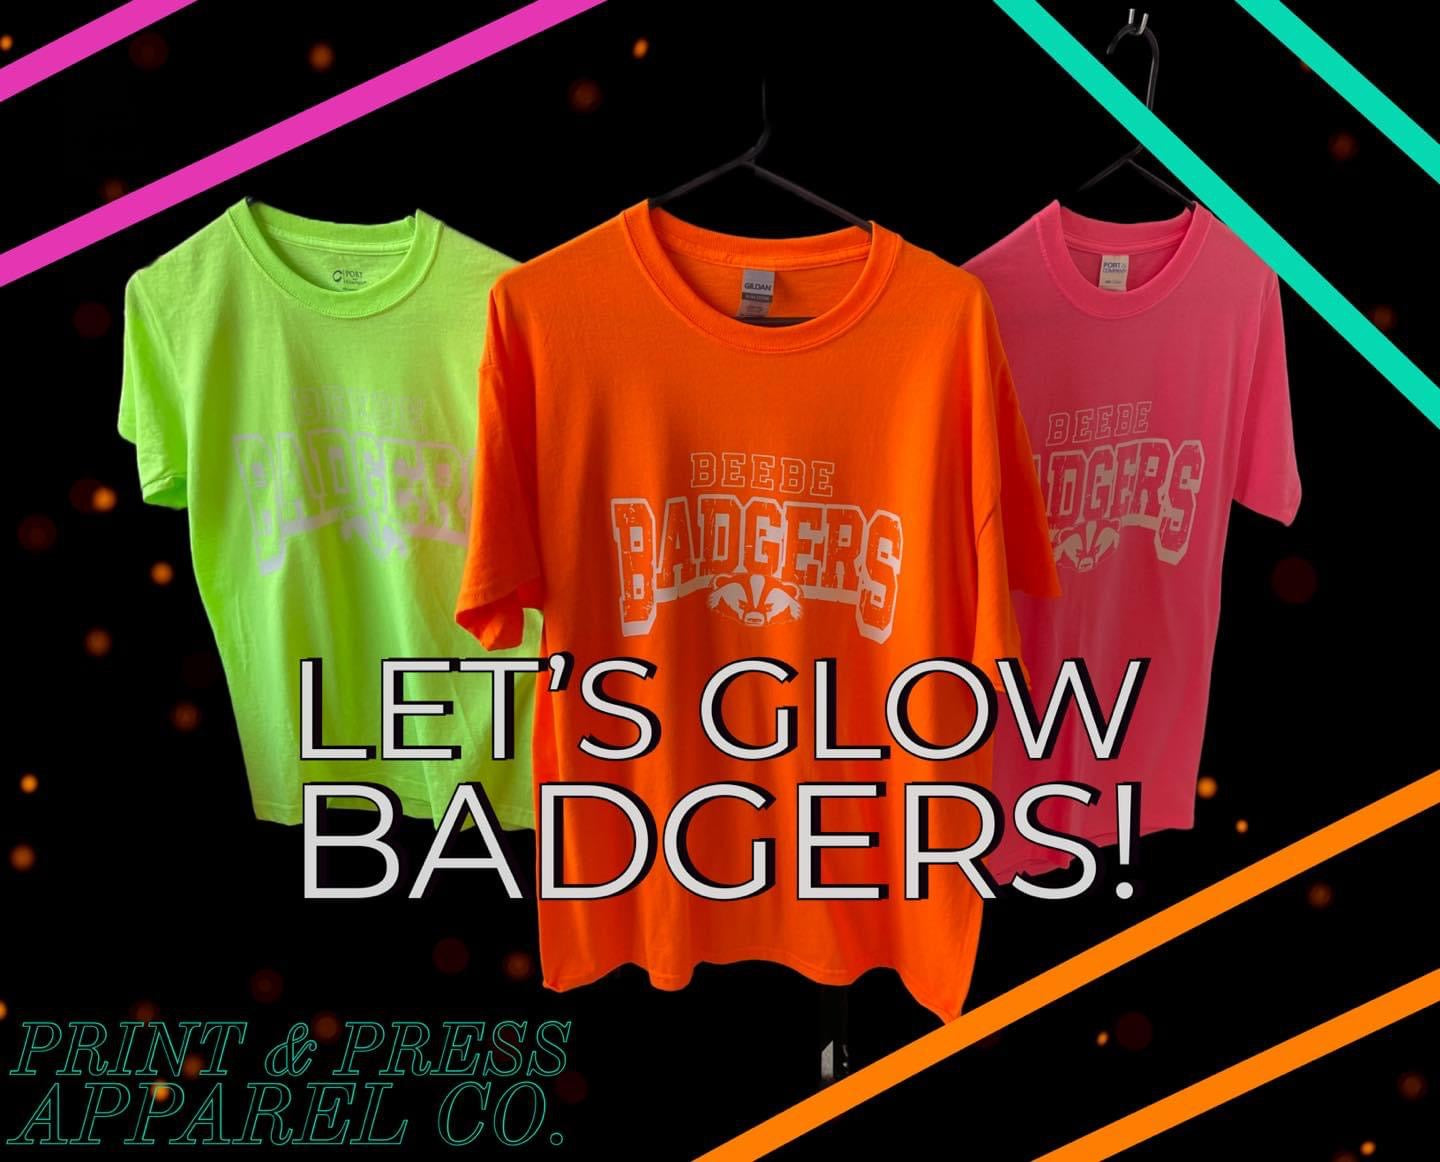 Let's Glow Badgers!